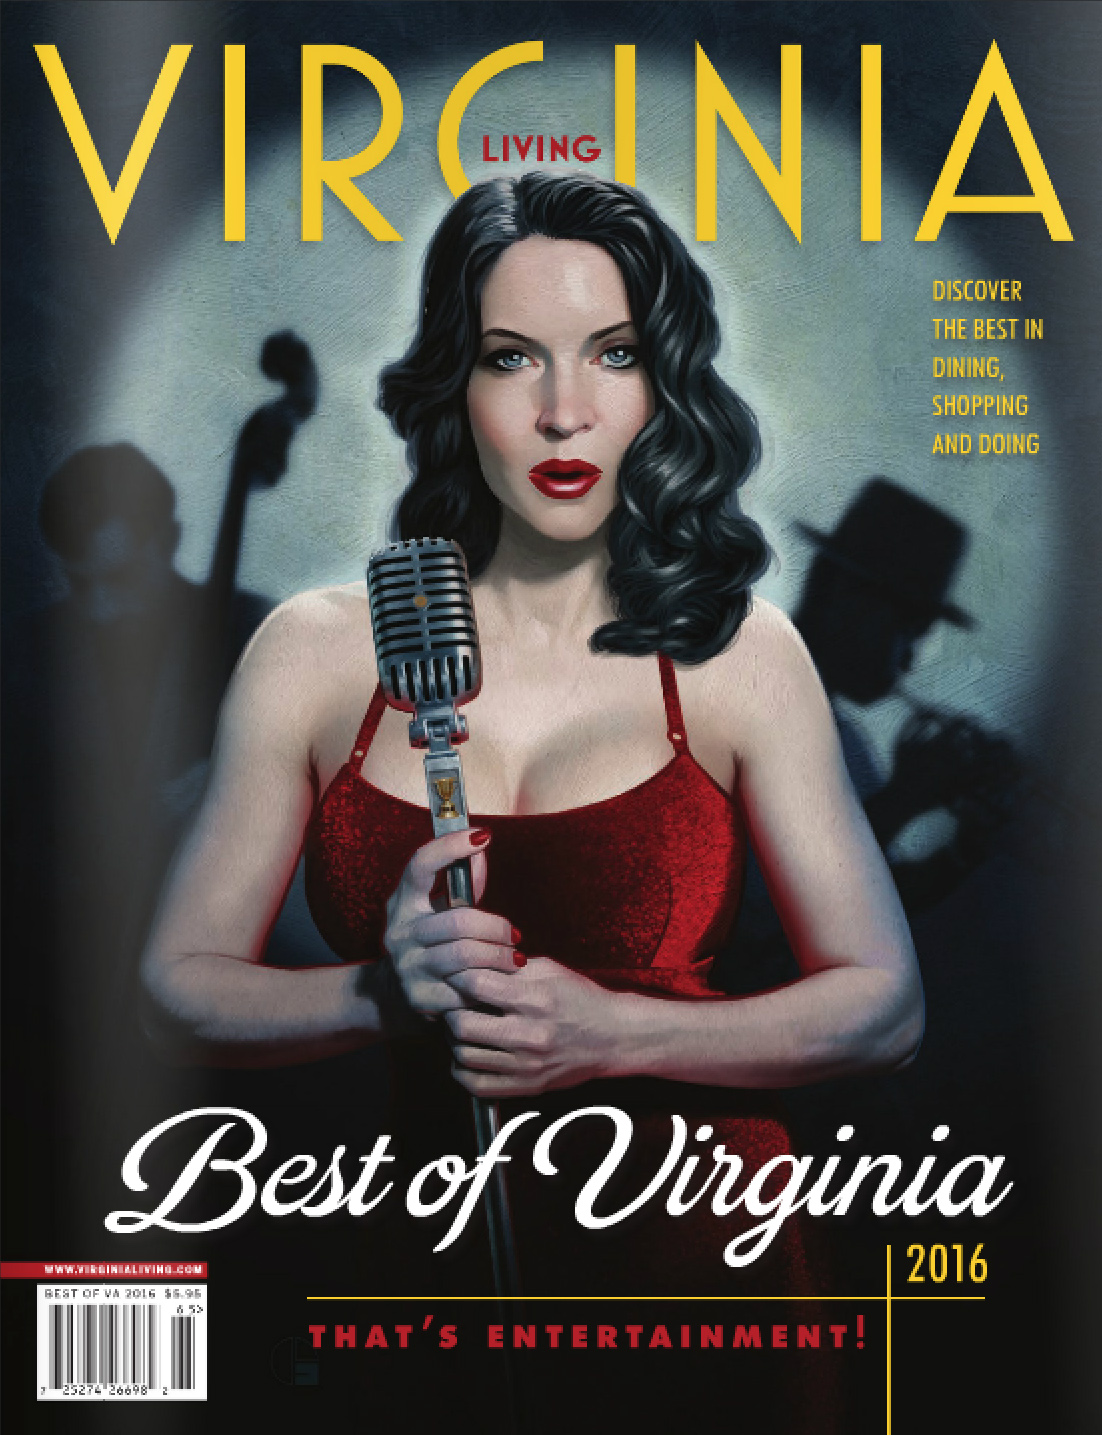 Virginia Living 2016 - Cover